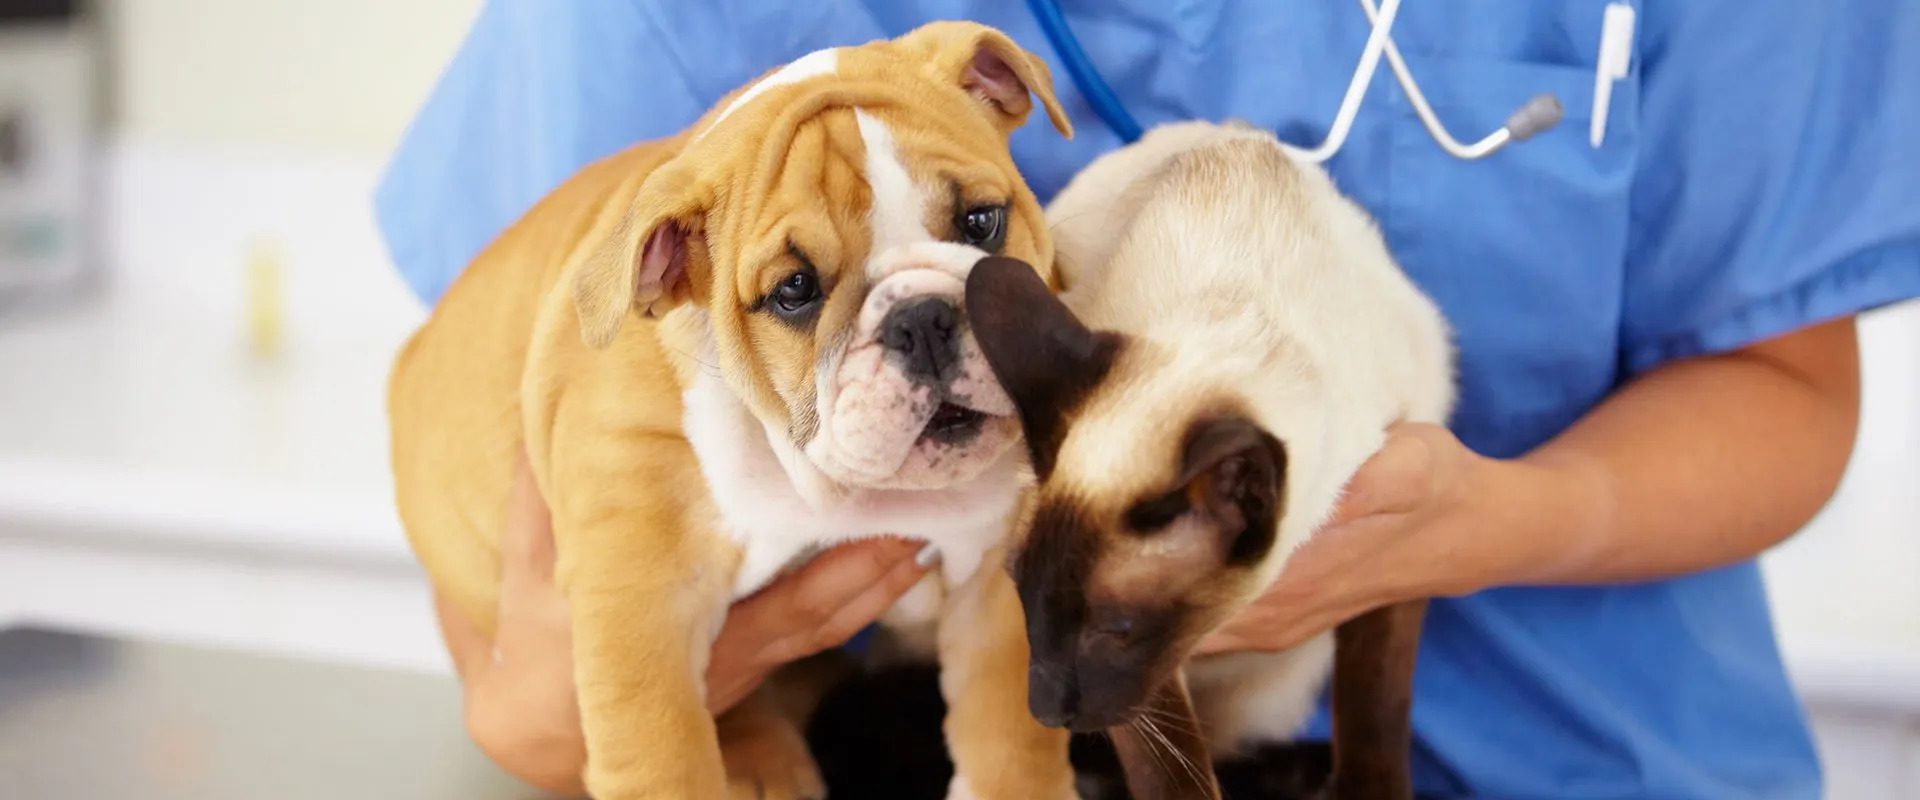 Veterinarian holding a Bulldog puppy and a Siamese kitten